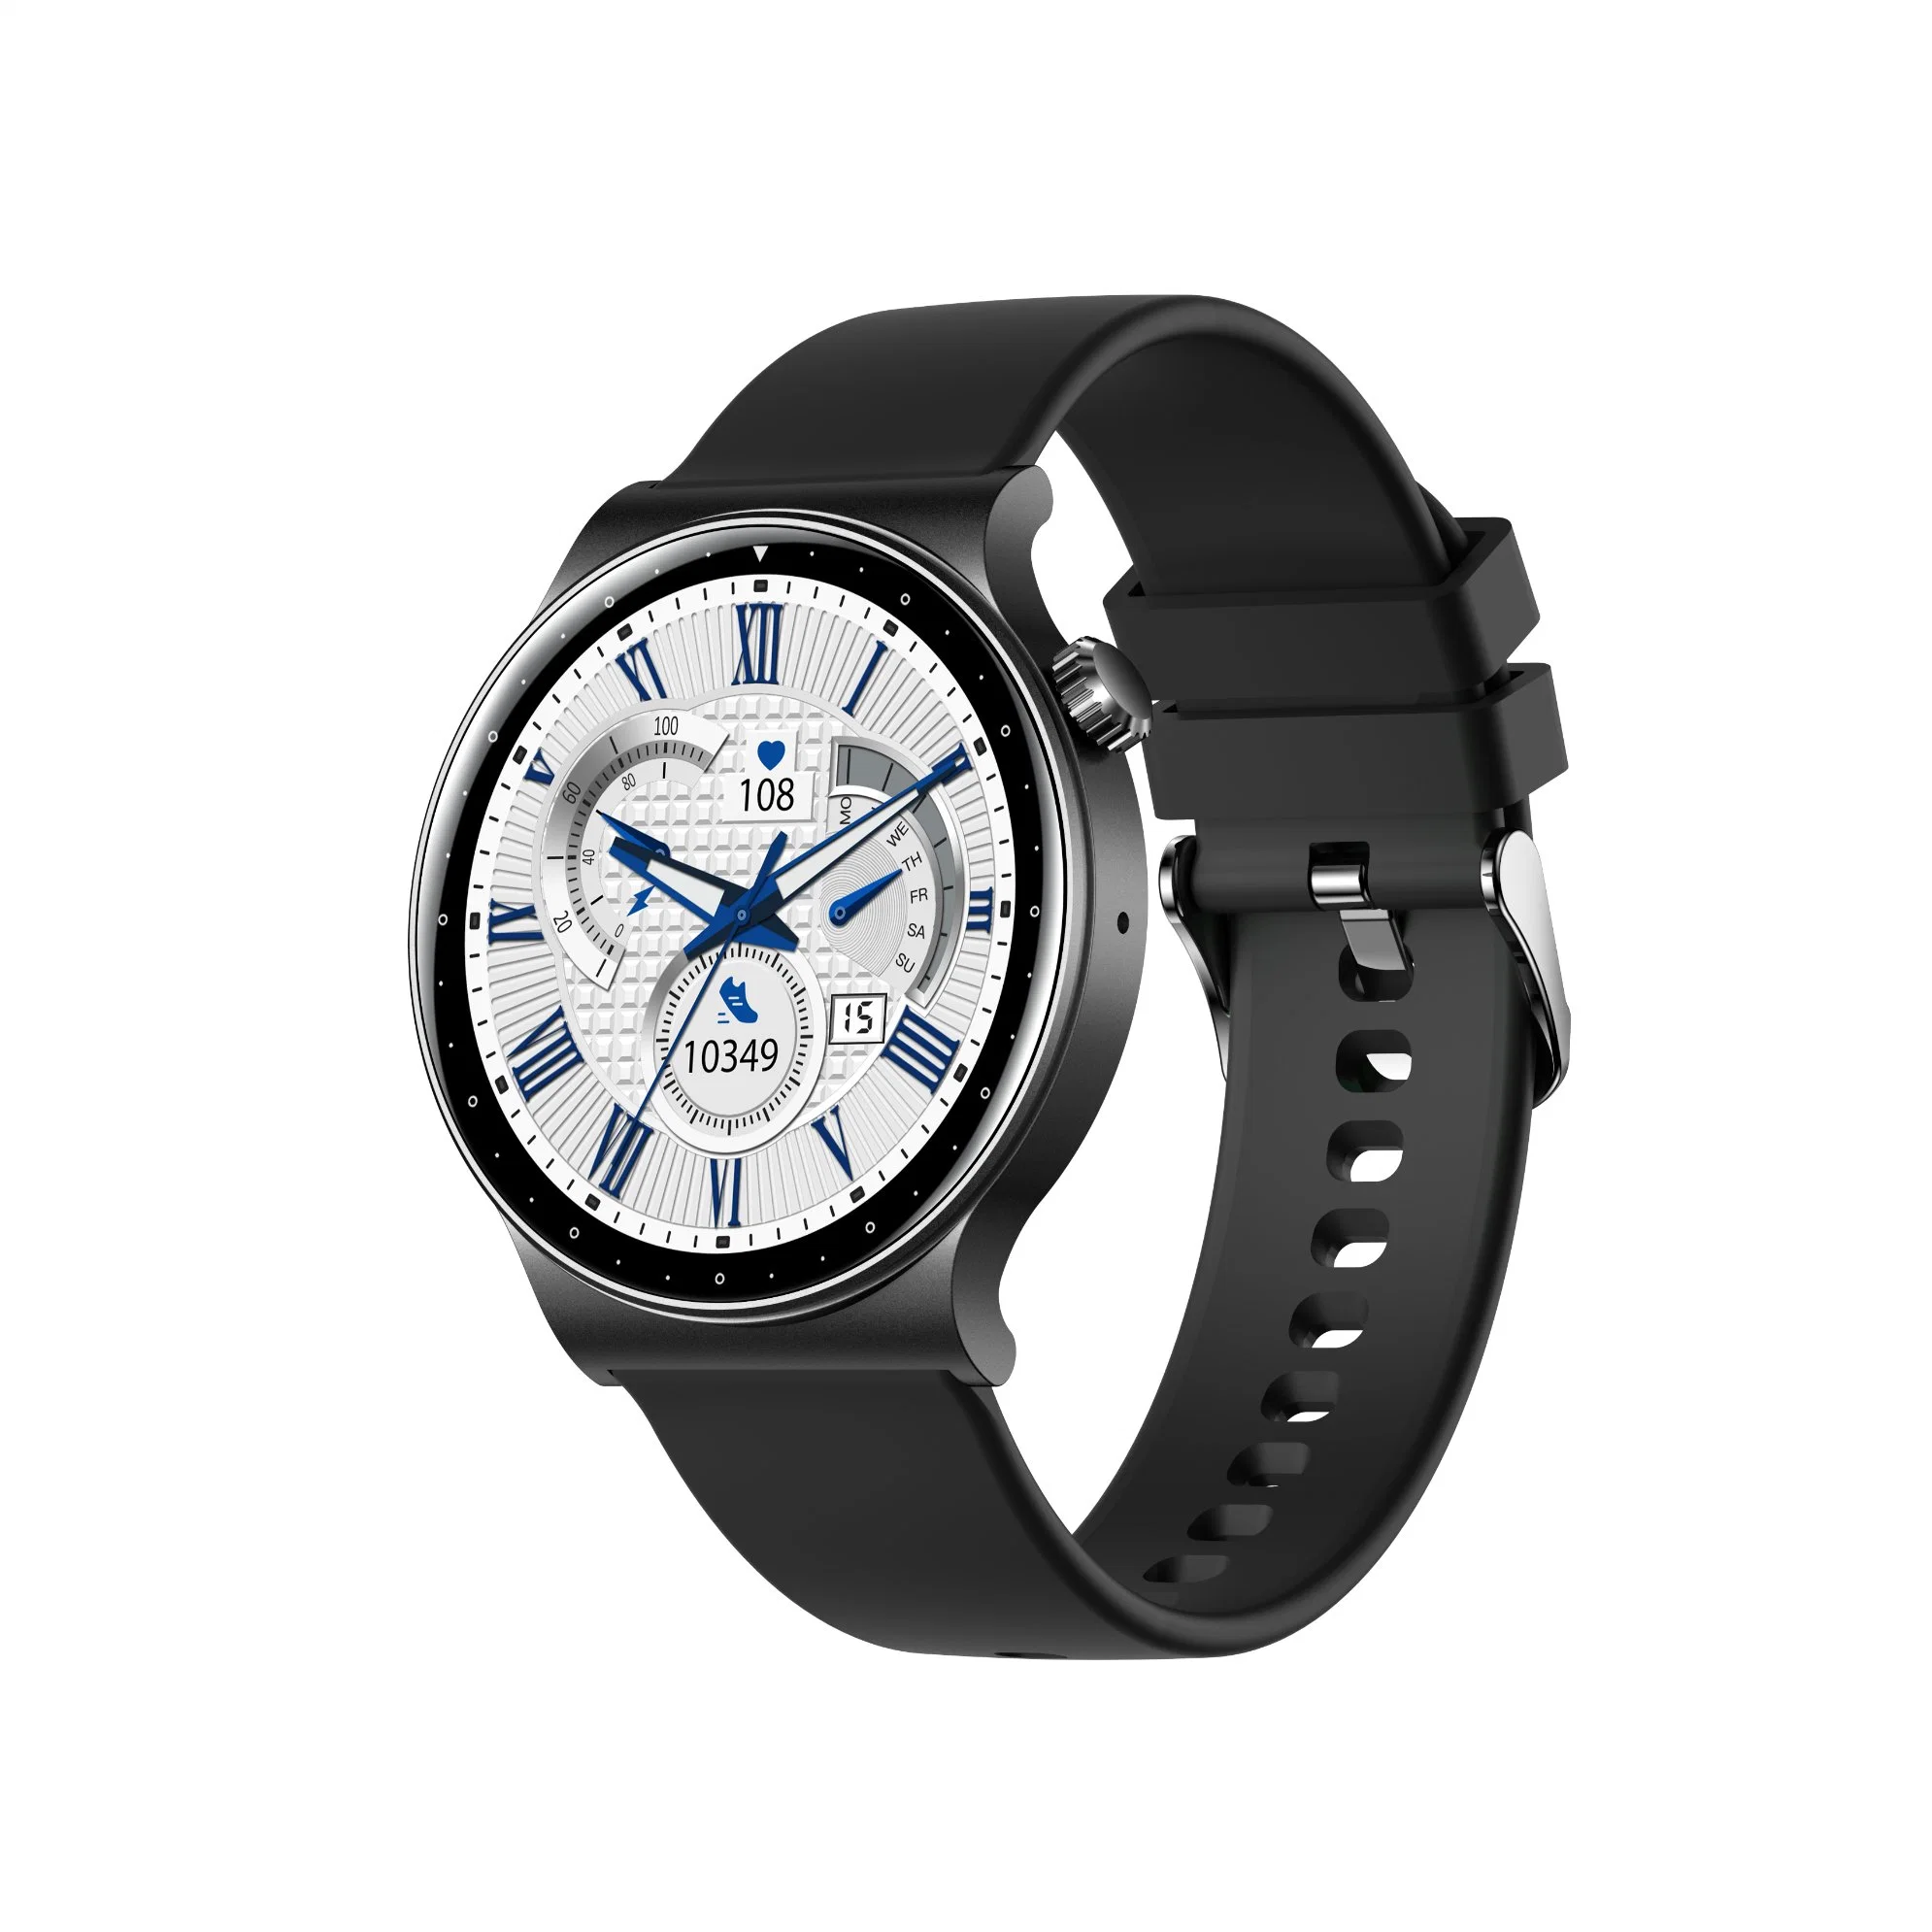 Nuevo reloj Smart Watch Kr08 Reloj despertador con frecuencia cardiaca con Bluetooth Reloj deportivo Smart Bracelet